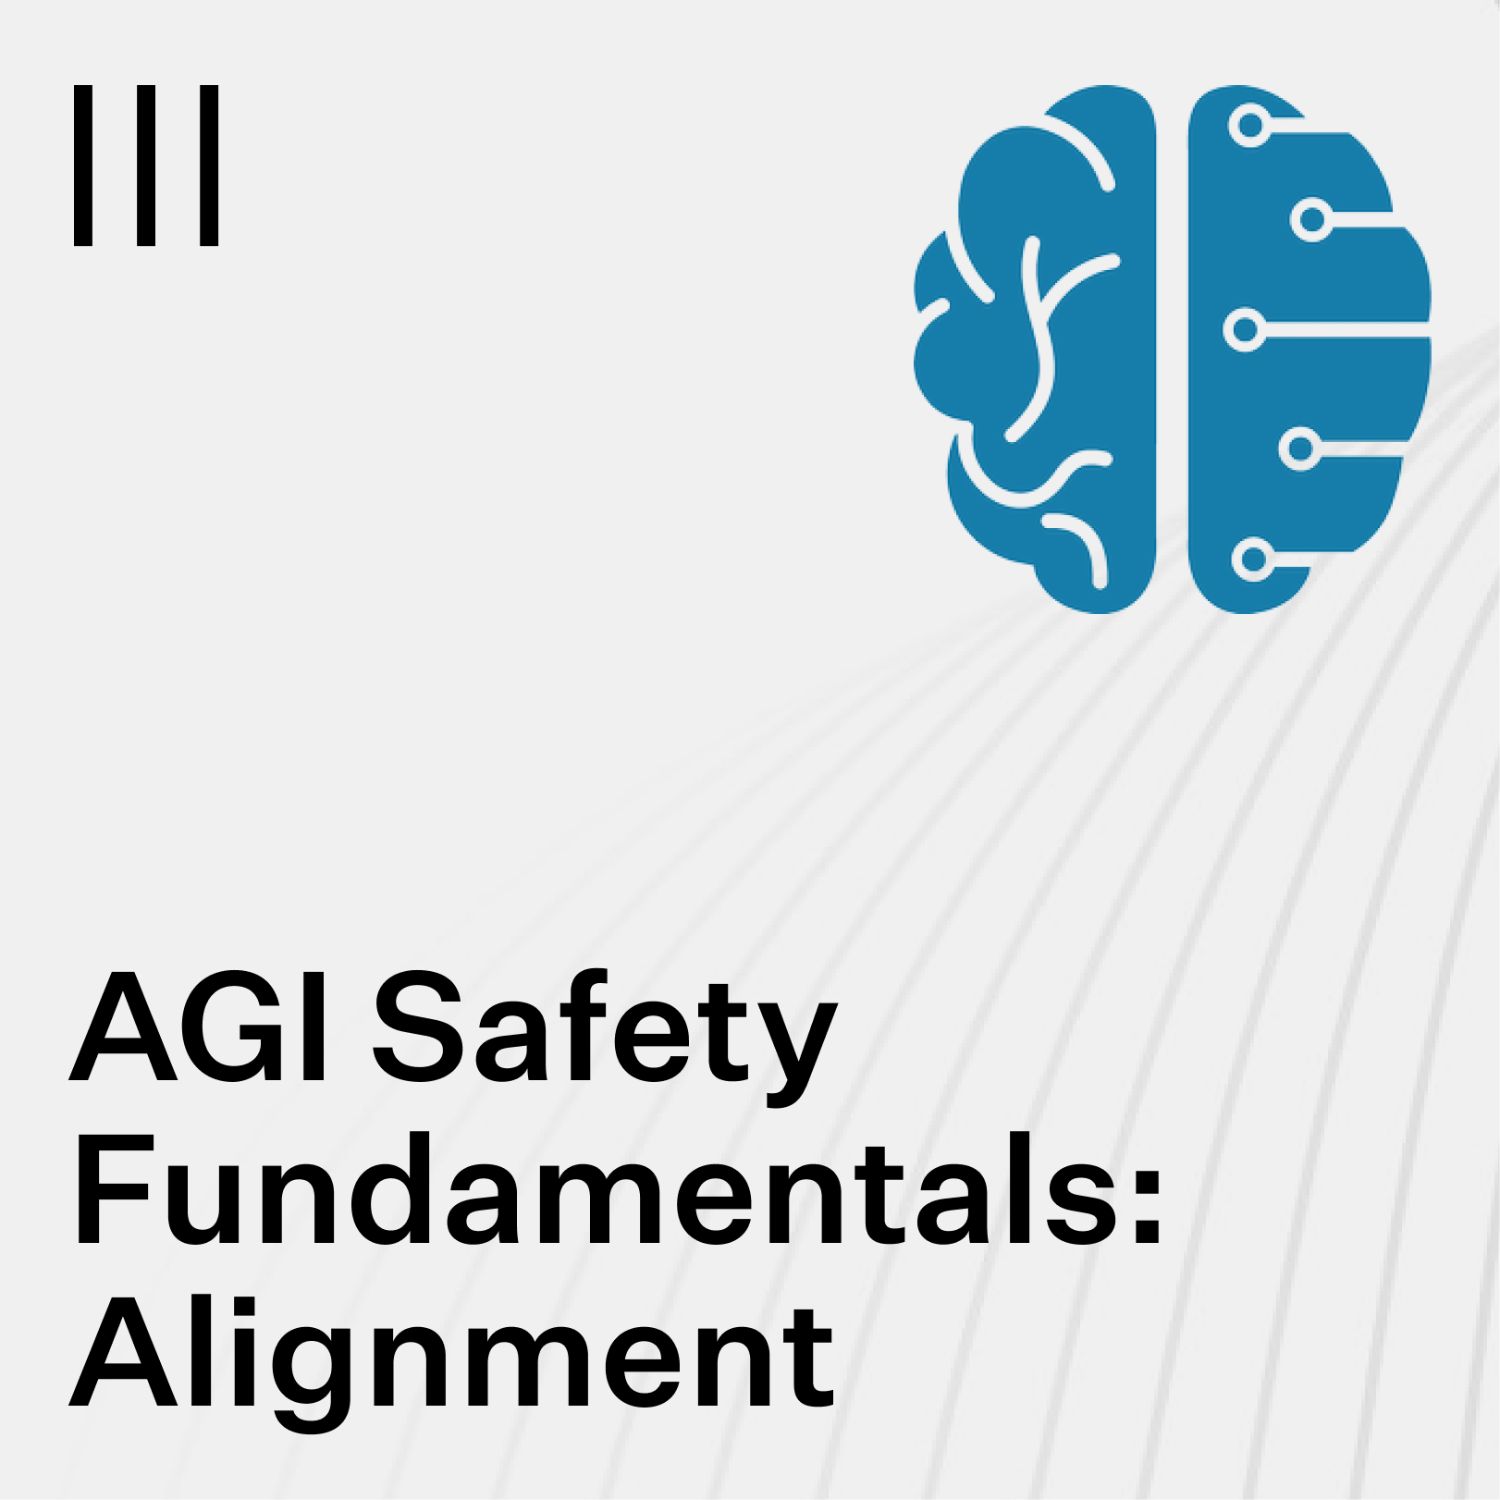 AGI Safety Fundamentals: Alignment